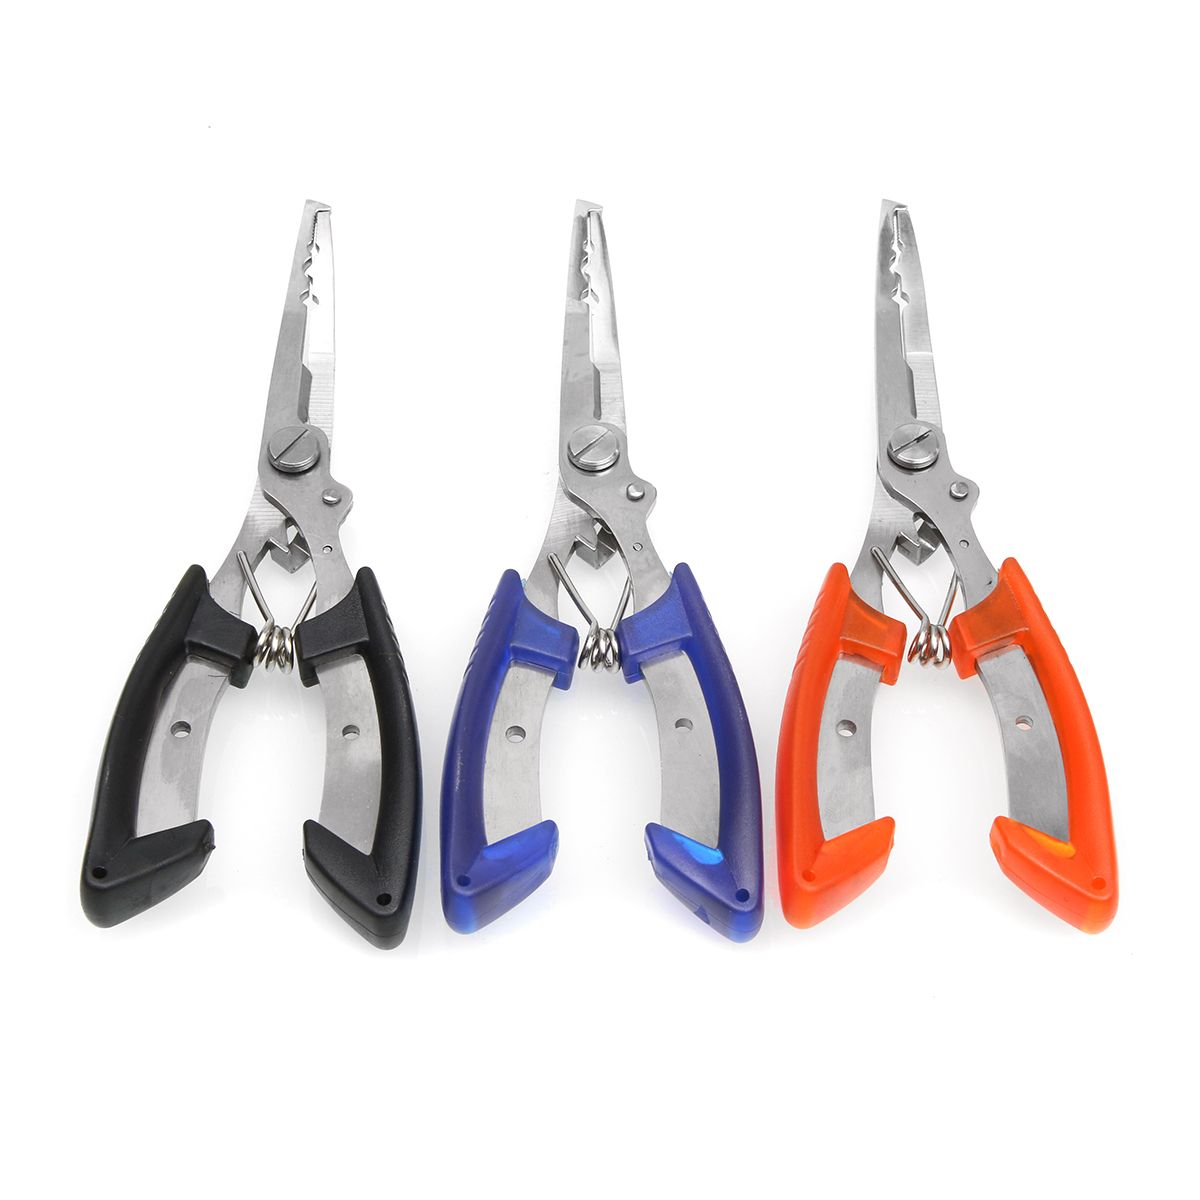 Stainless-Steel-Fishing-Pliers-Plierweiter-Scissors-Line-Cutter-Hook-Tackle-Tool-1151463